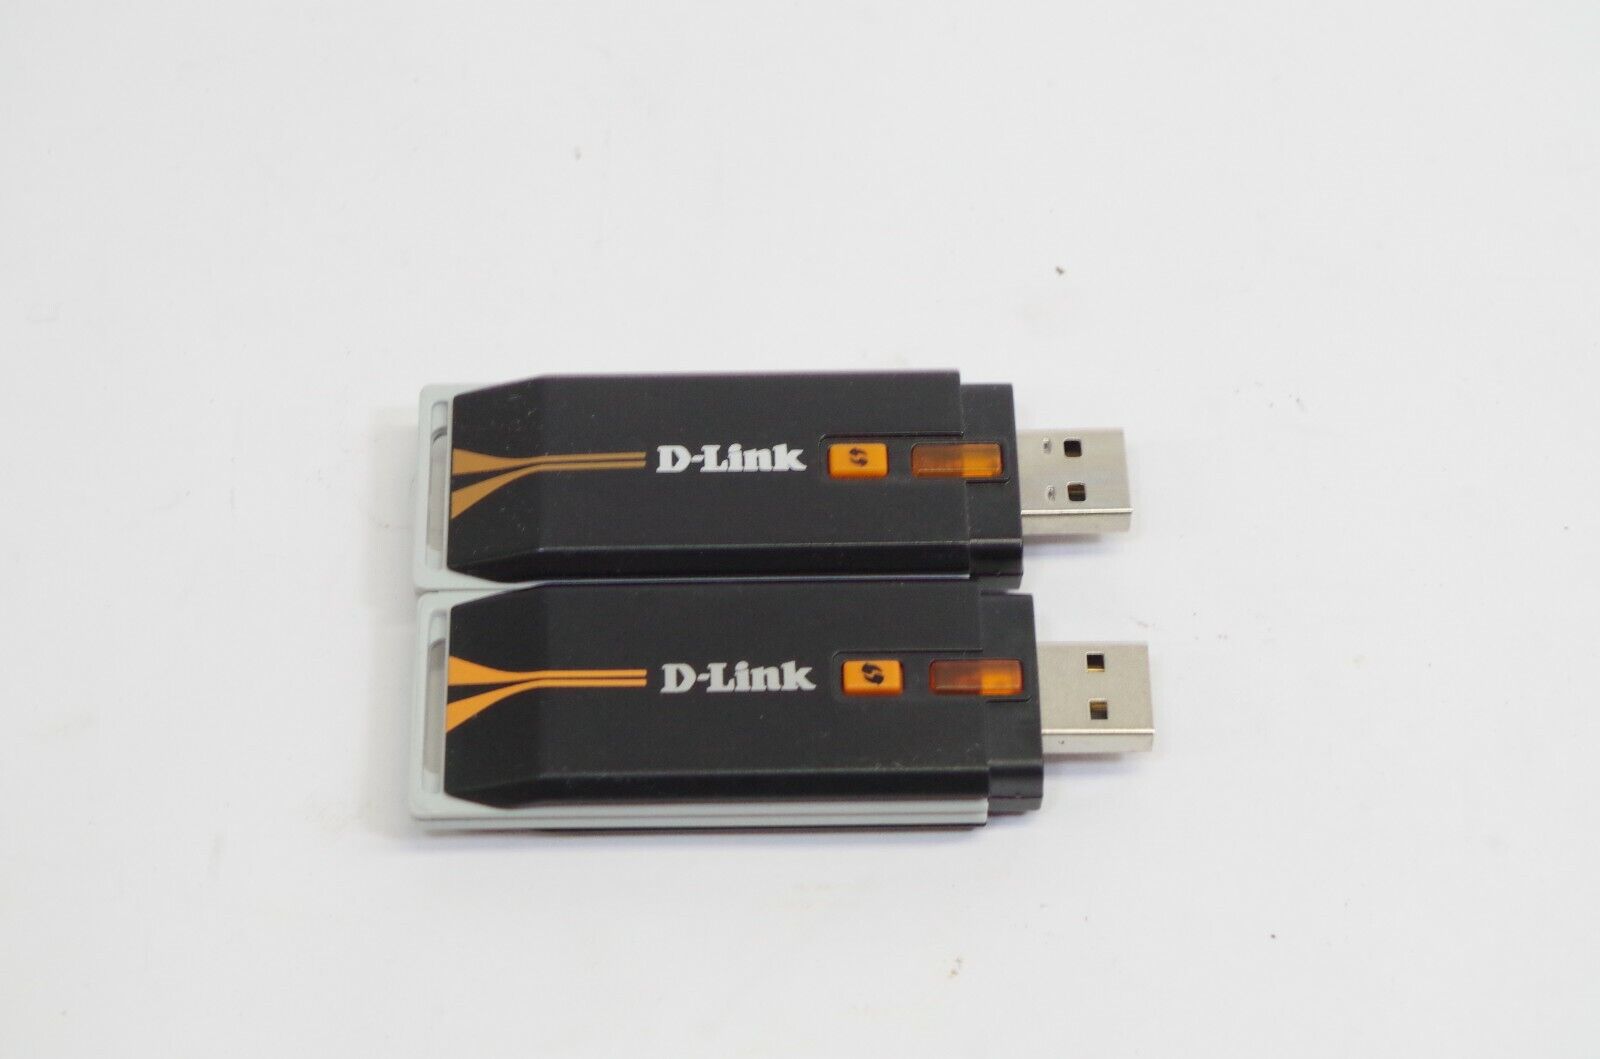 Lot of 2 D-LINK USB DWA-130 WA-125 N300 Wireless N WiFi USB Adapters